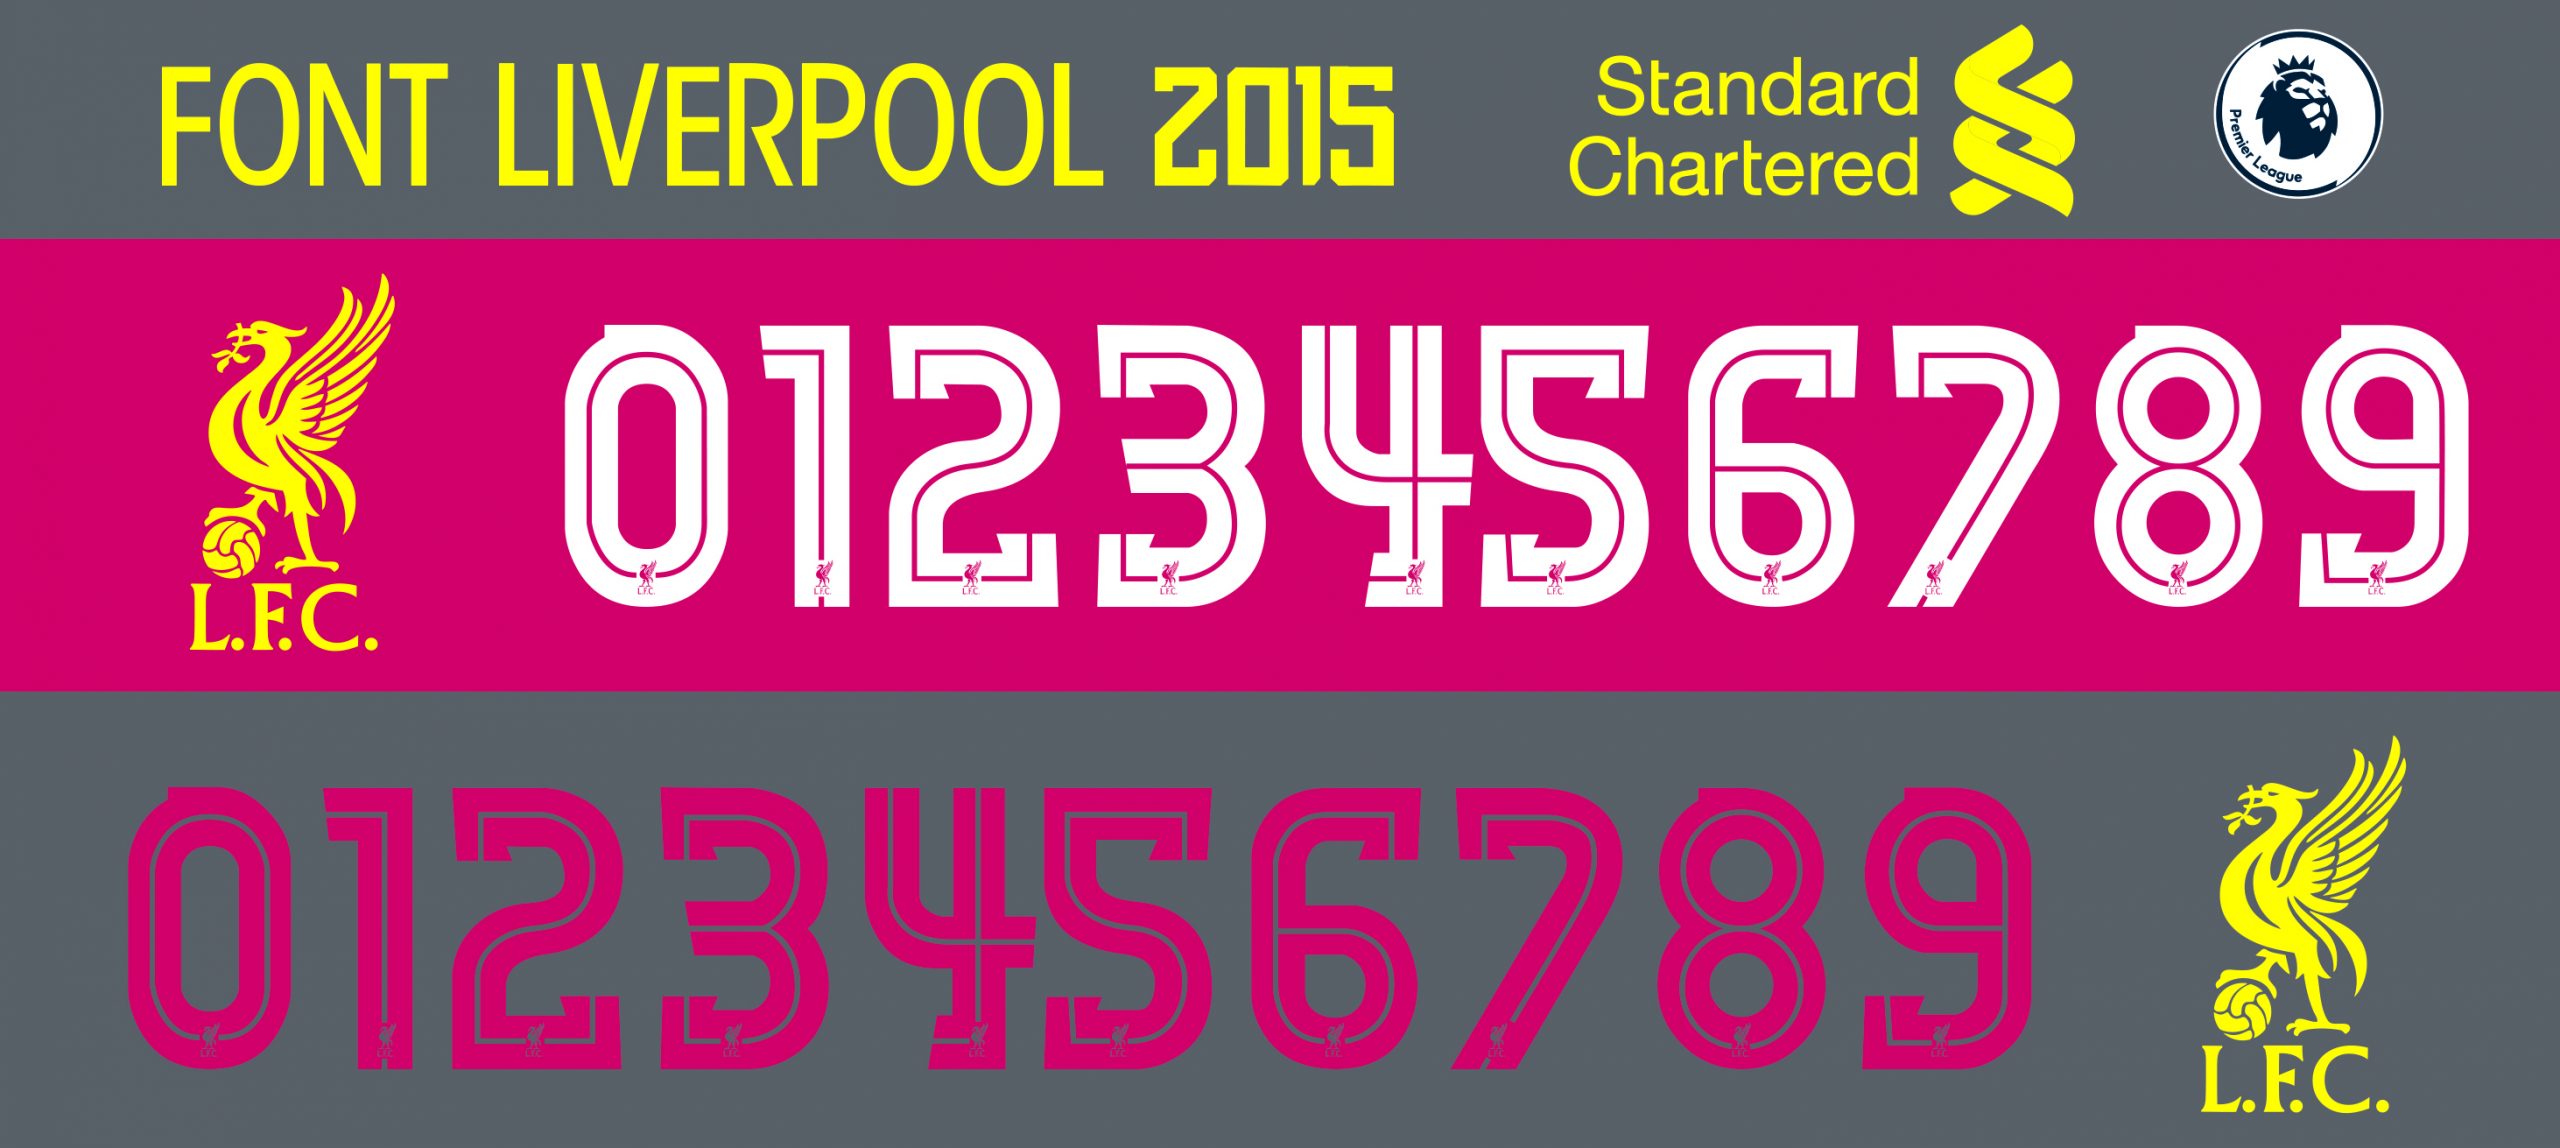 Font Liverpool 2015